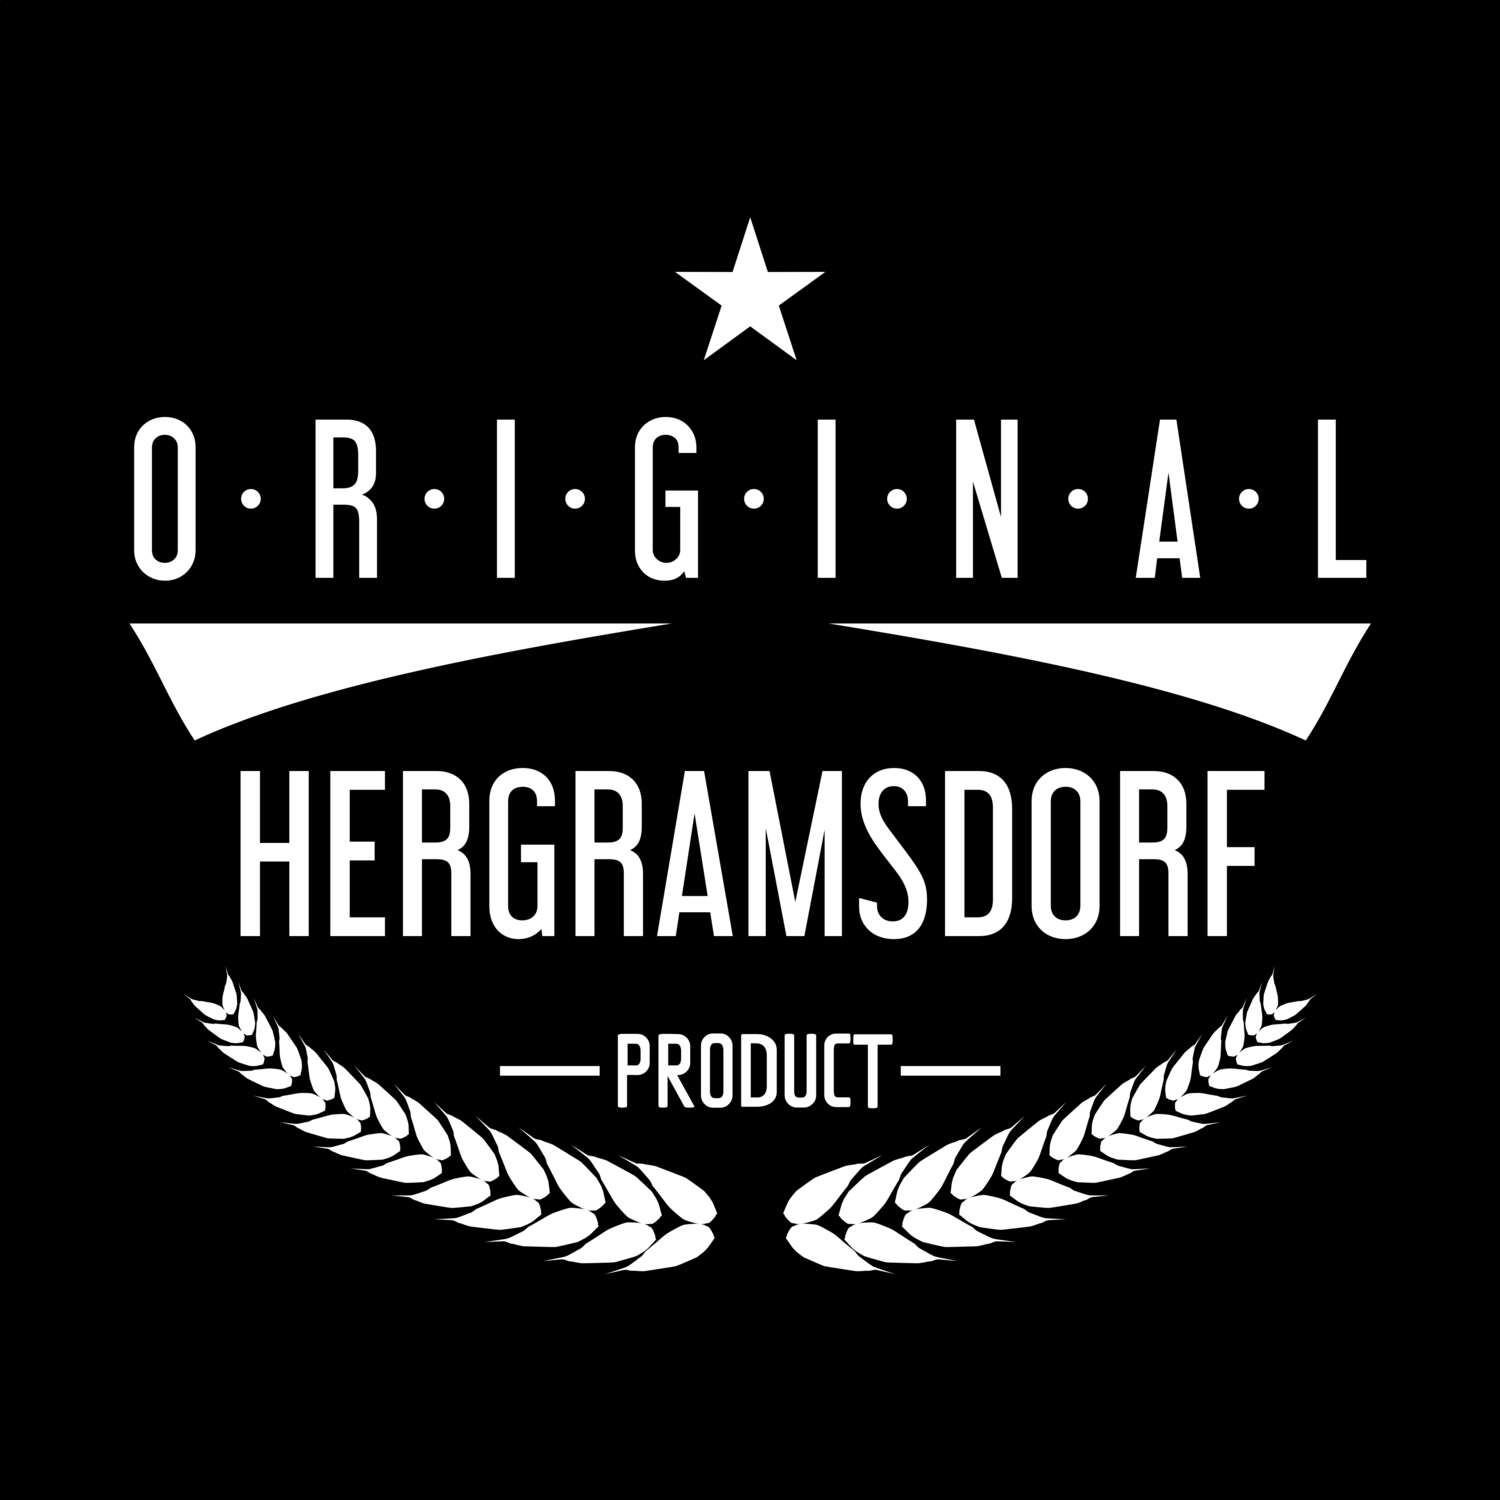 Hergramsdorf T-Shirt »Original Product«